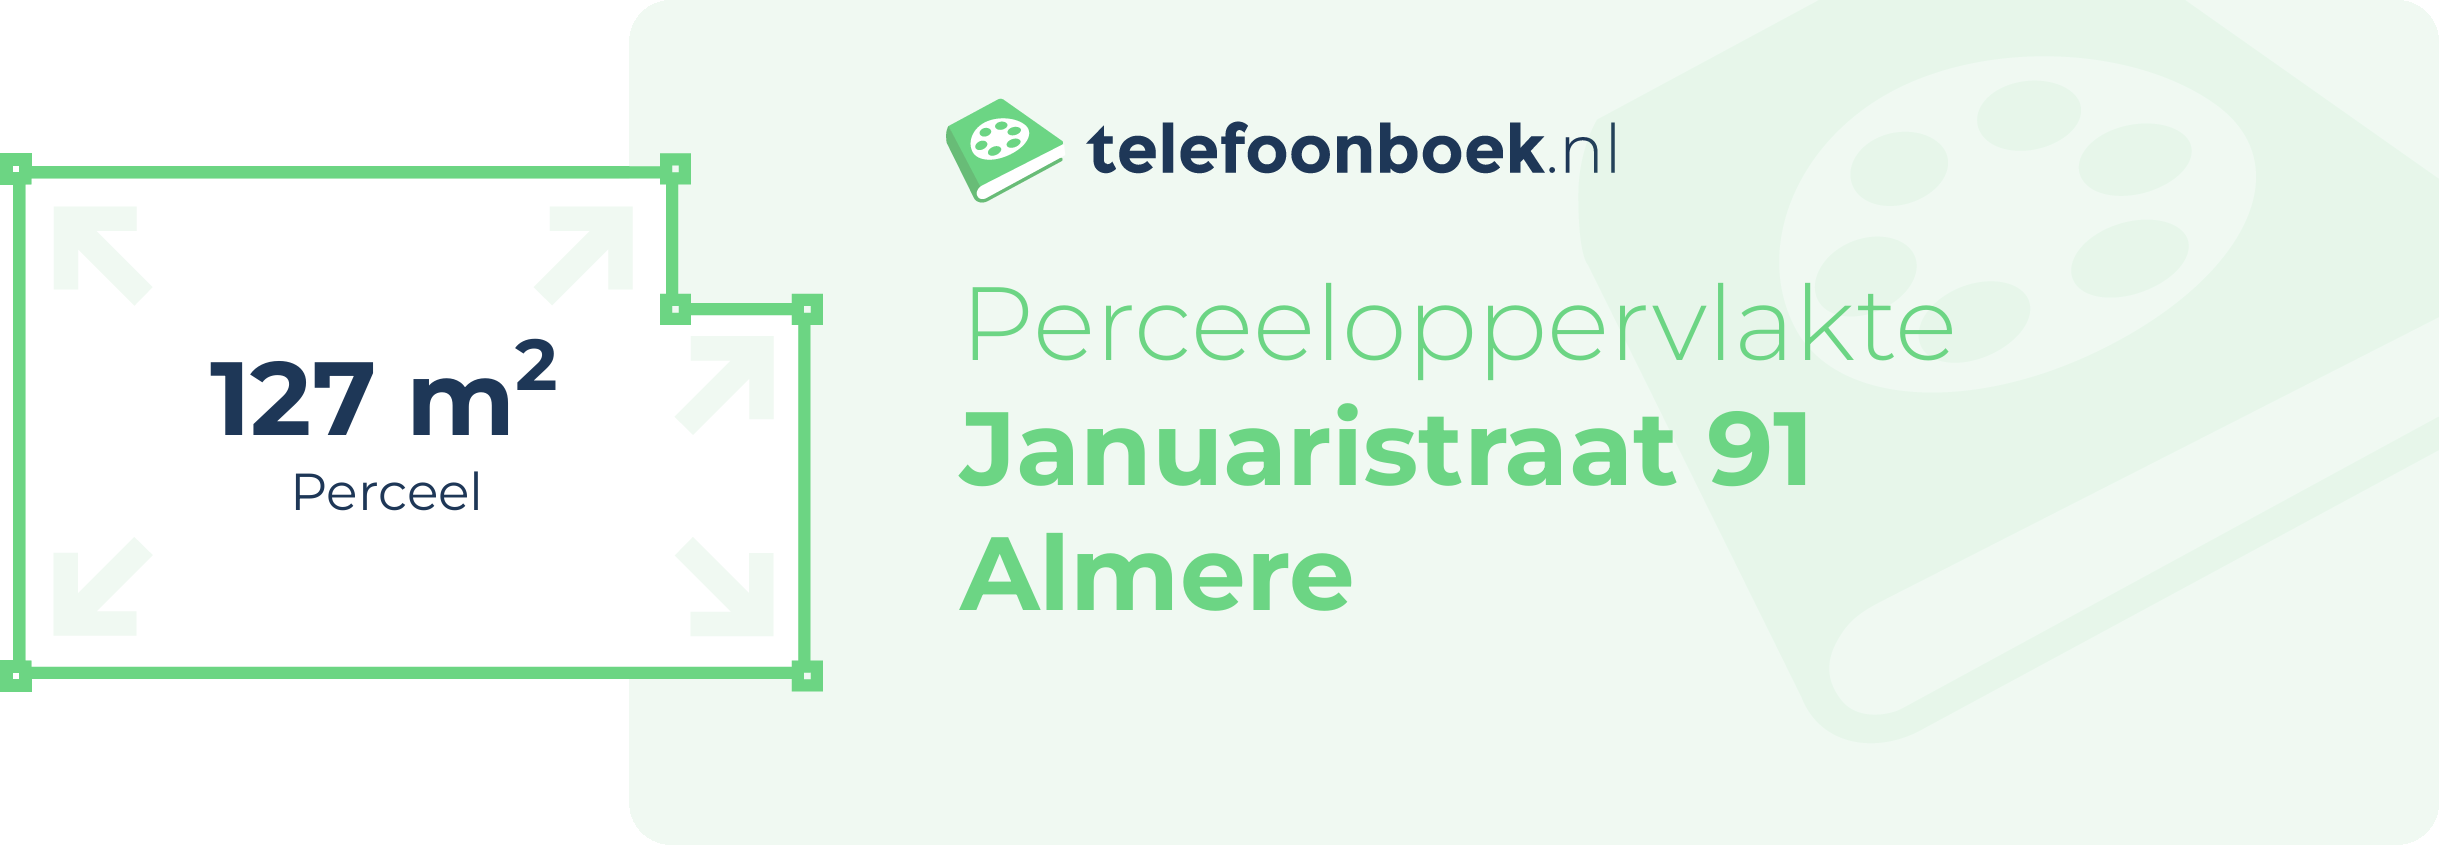 Perceeloppervlakte Januaristraat 91 Almere